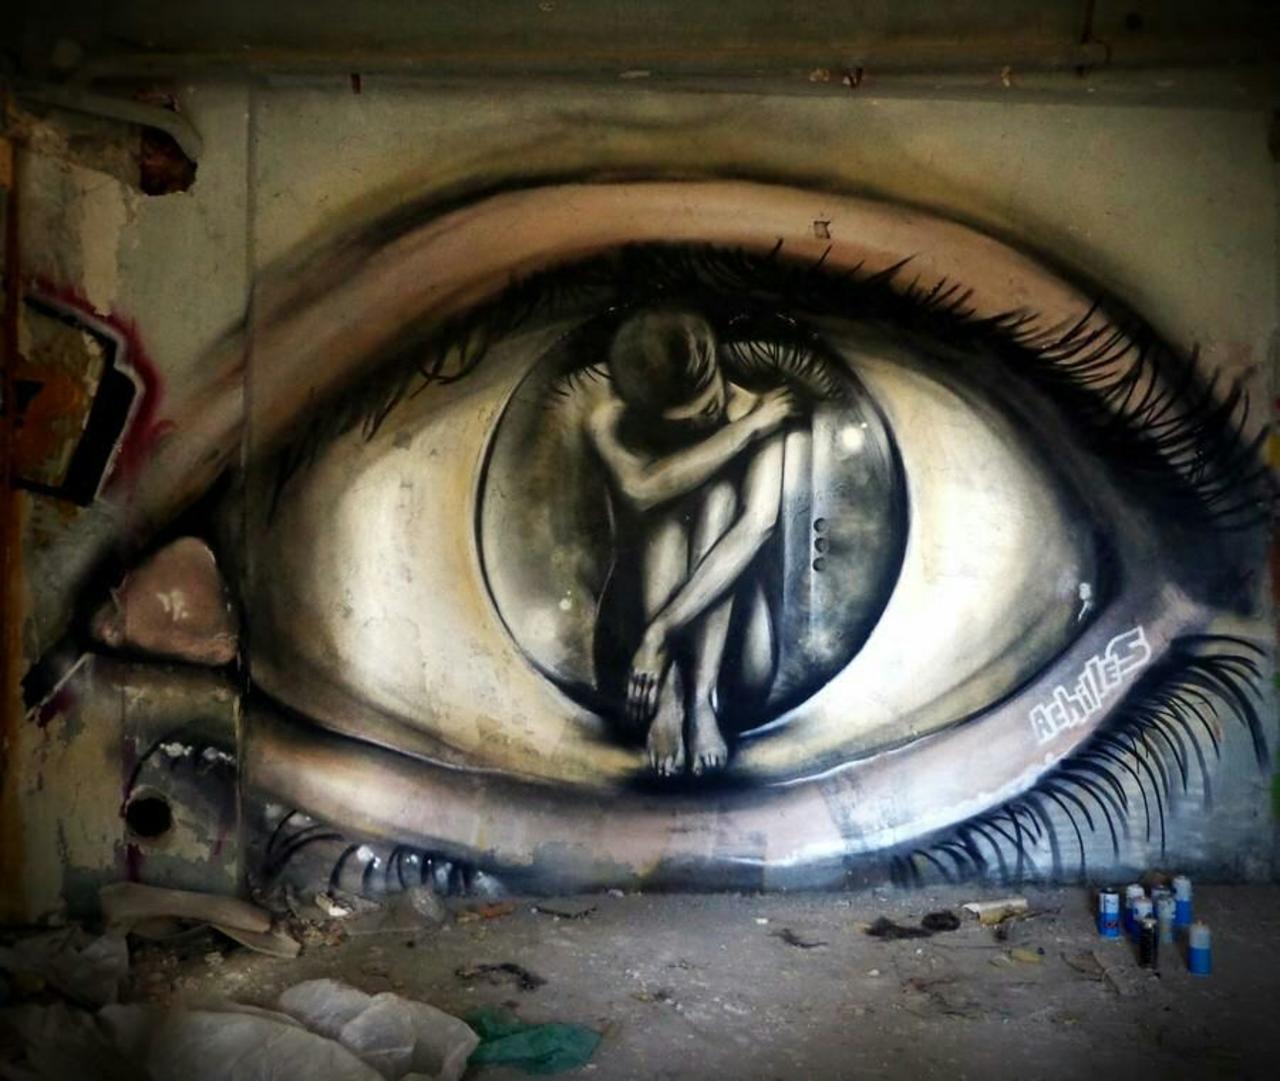 RT @QueGraffiti: Dentro del ojo.
Artista: Achilles
Atenas, Grecia.
#art #streetart #mural #graffiti http://t.co/oRDEXsHdv4